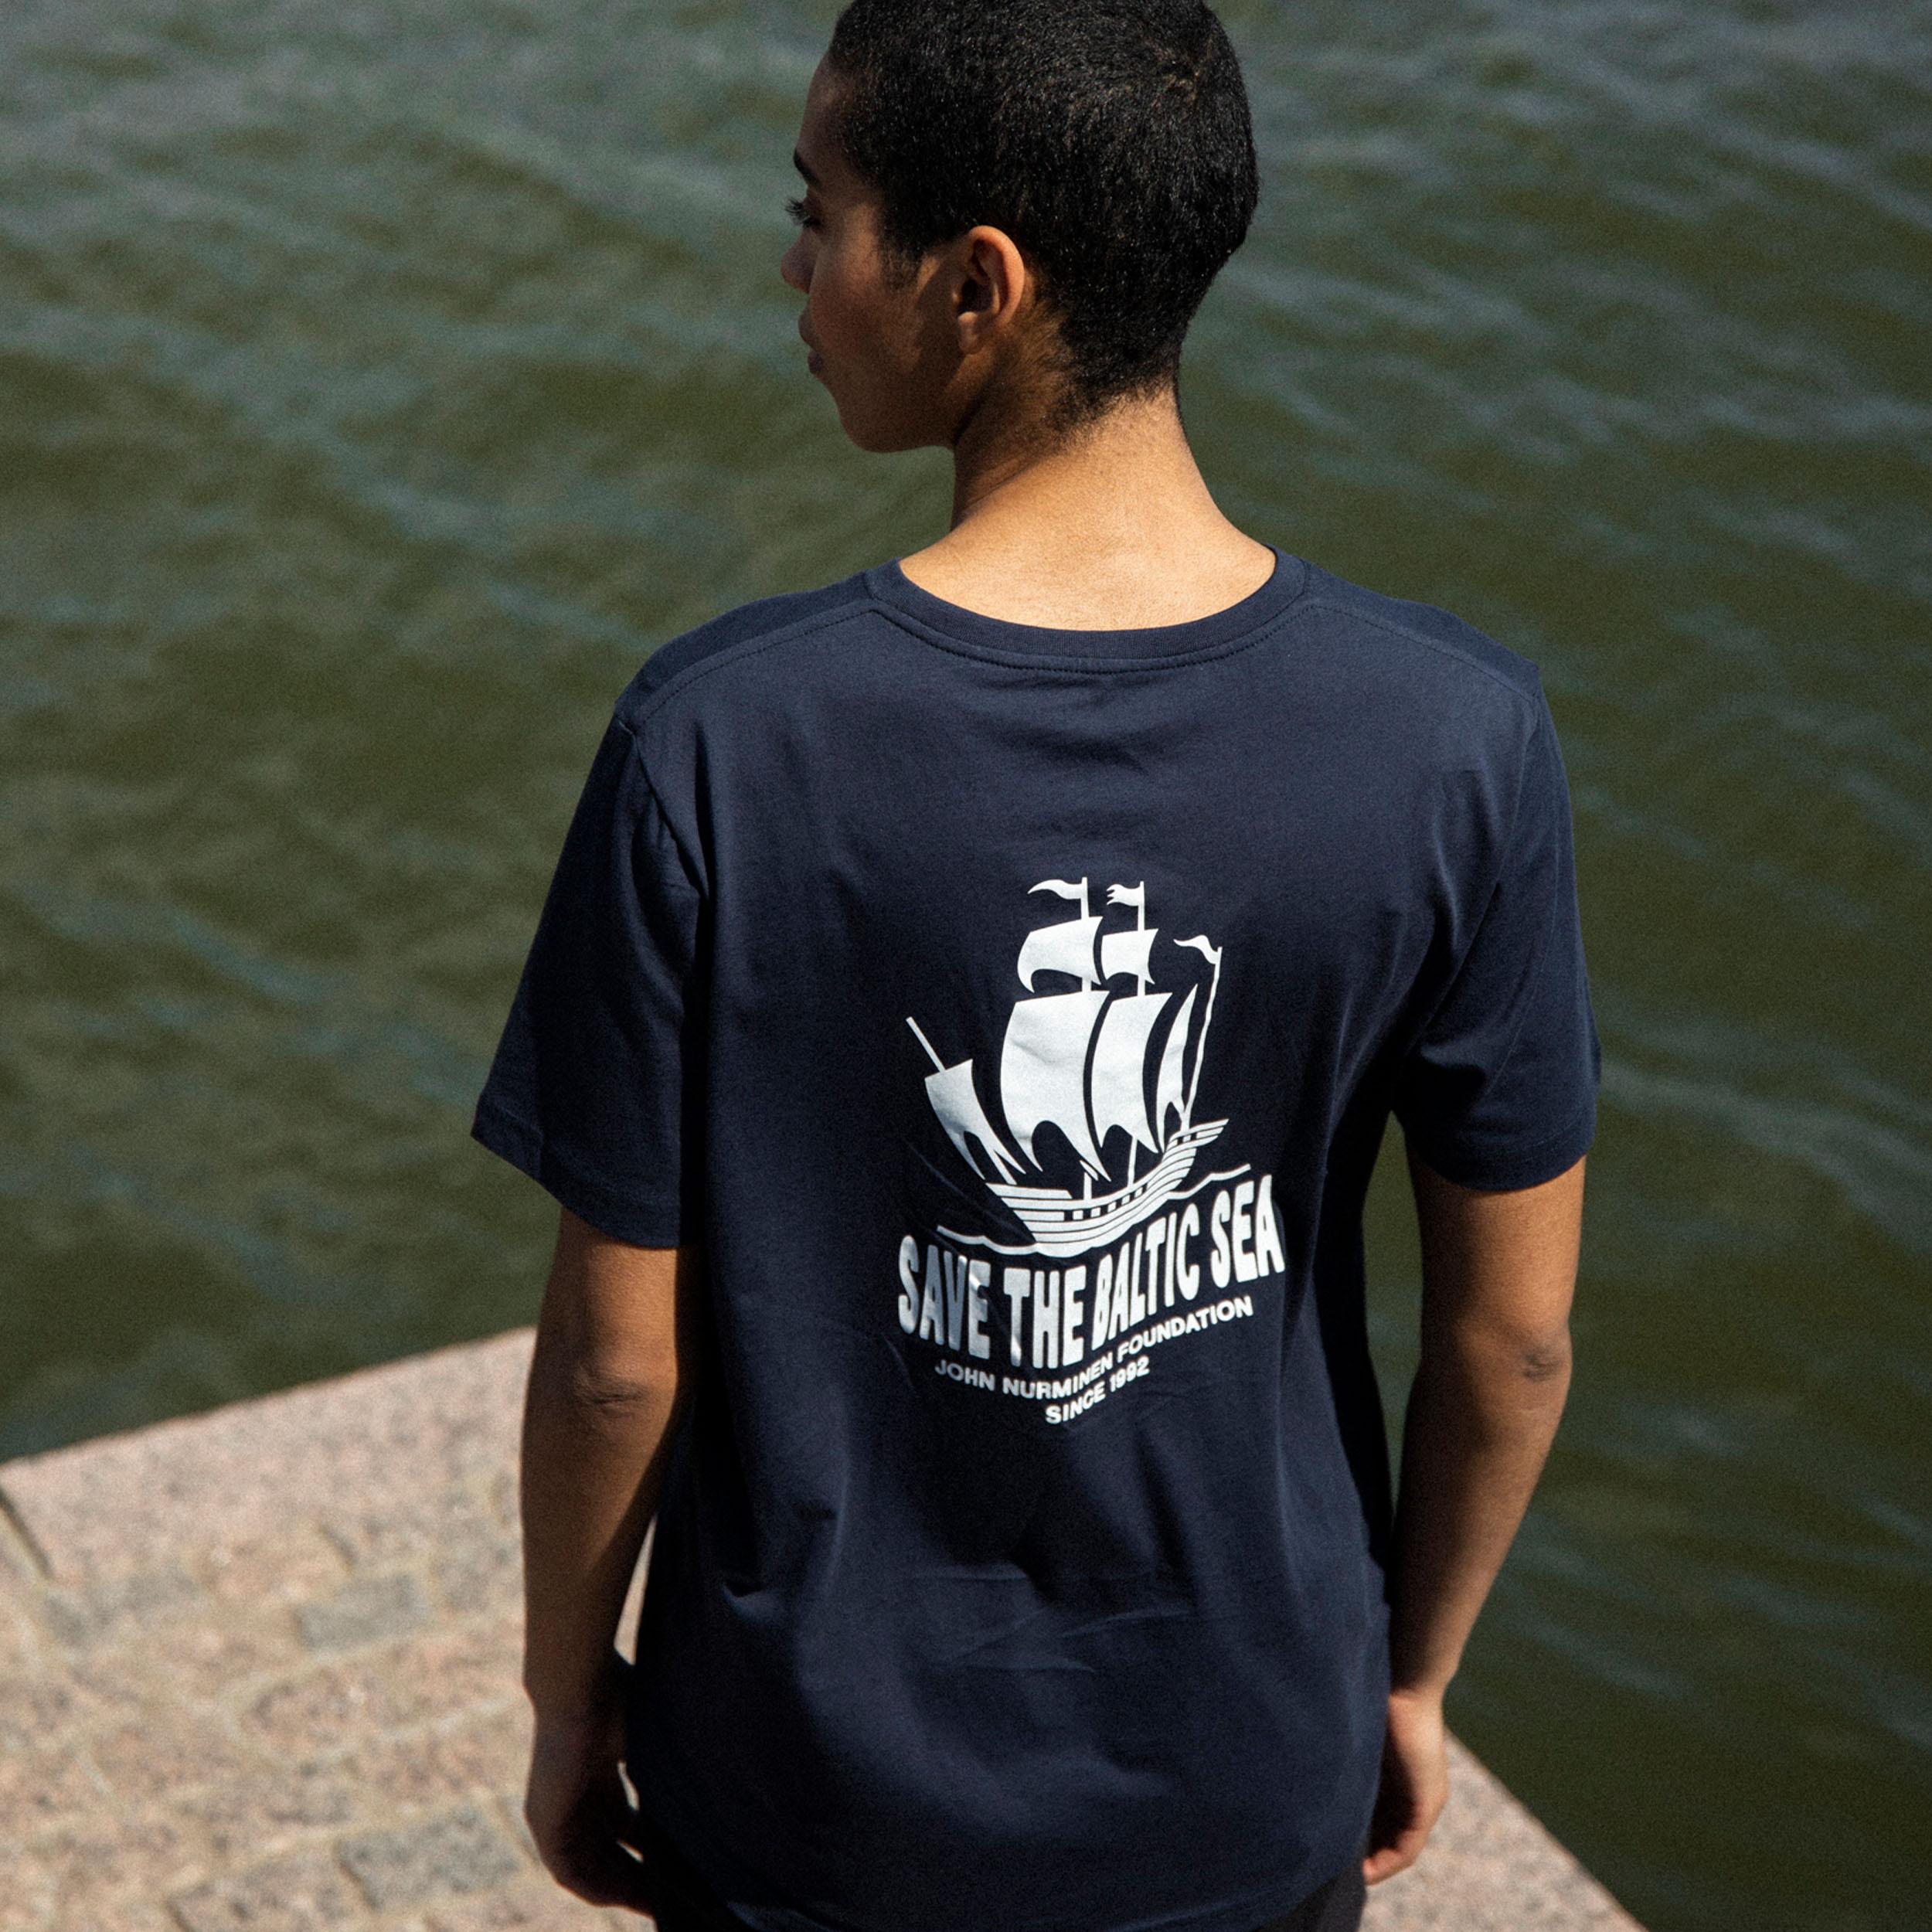 Save The Baltic Sea T-shirt